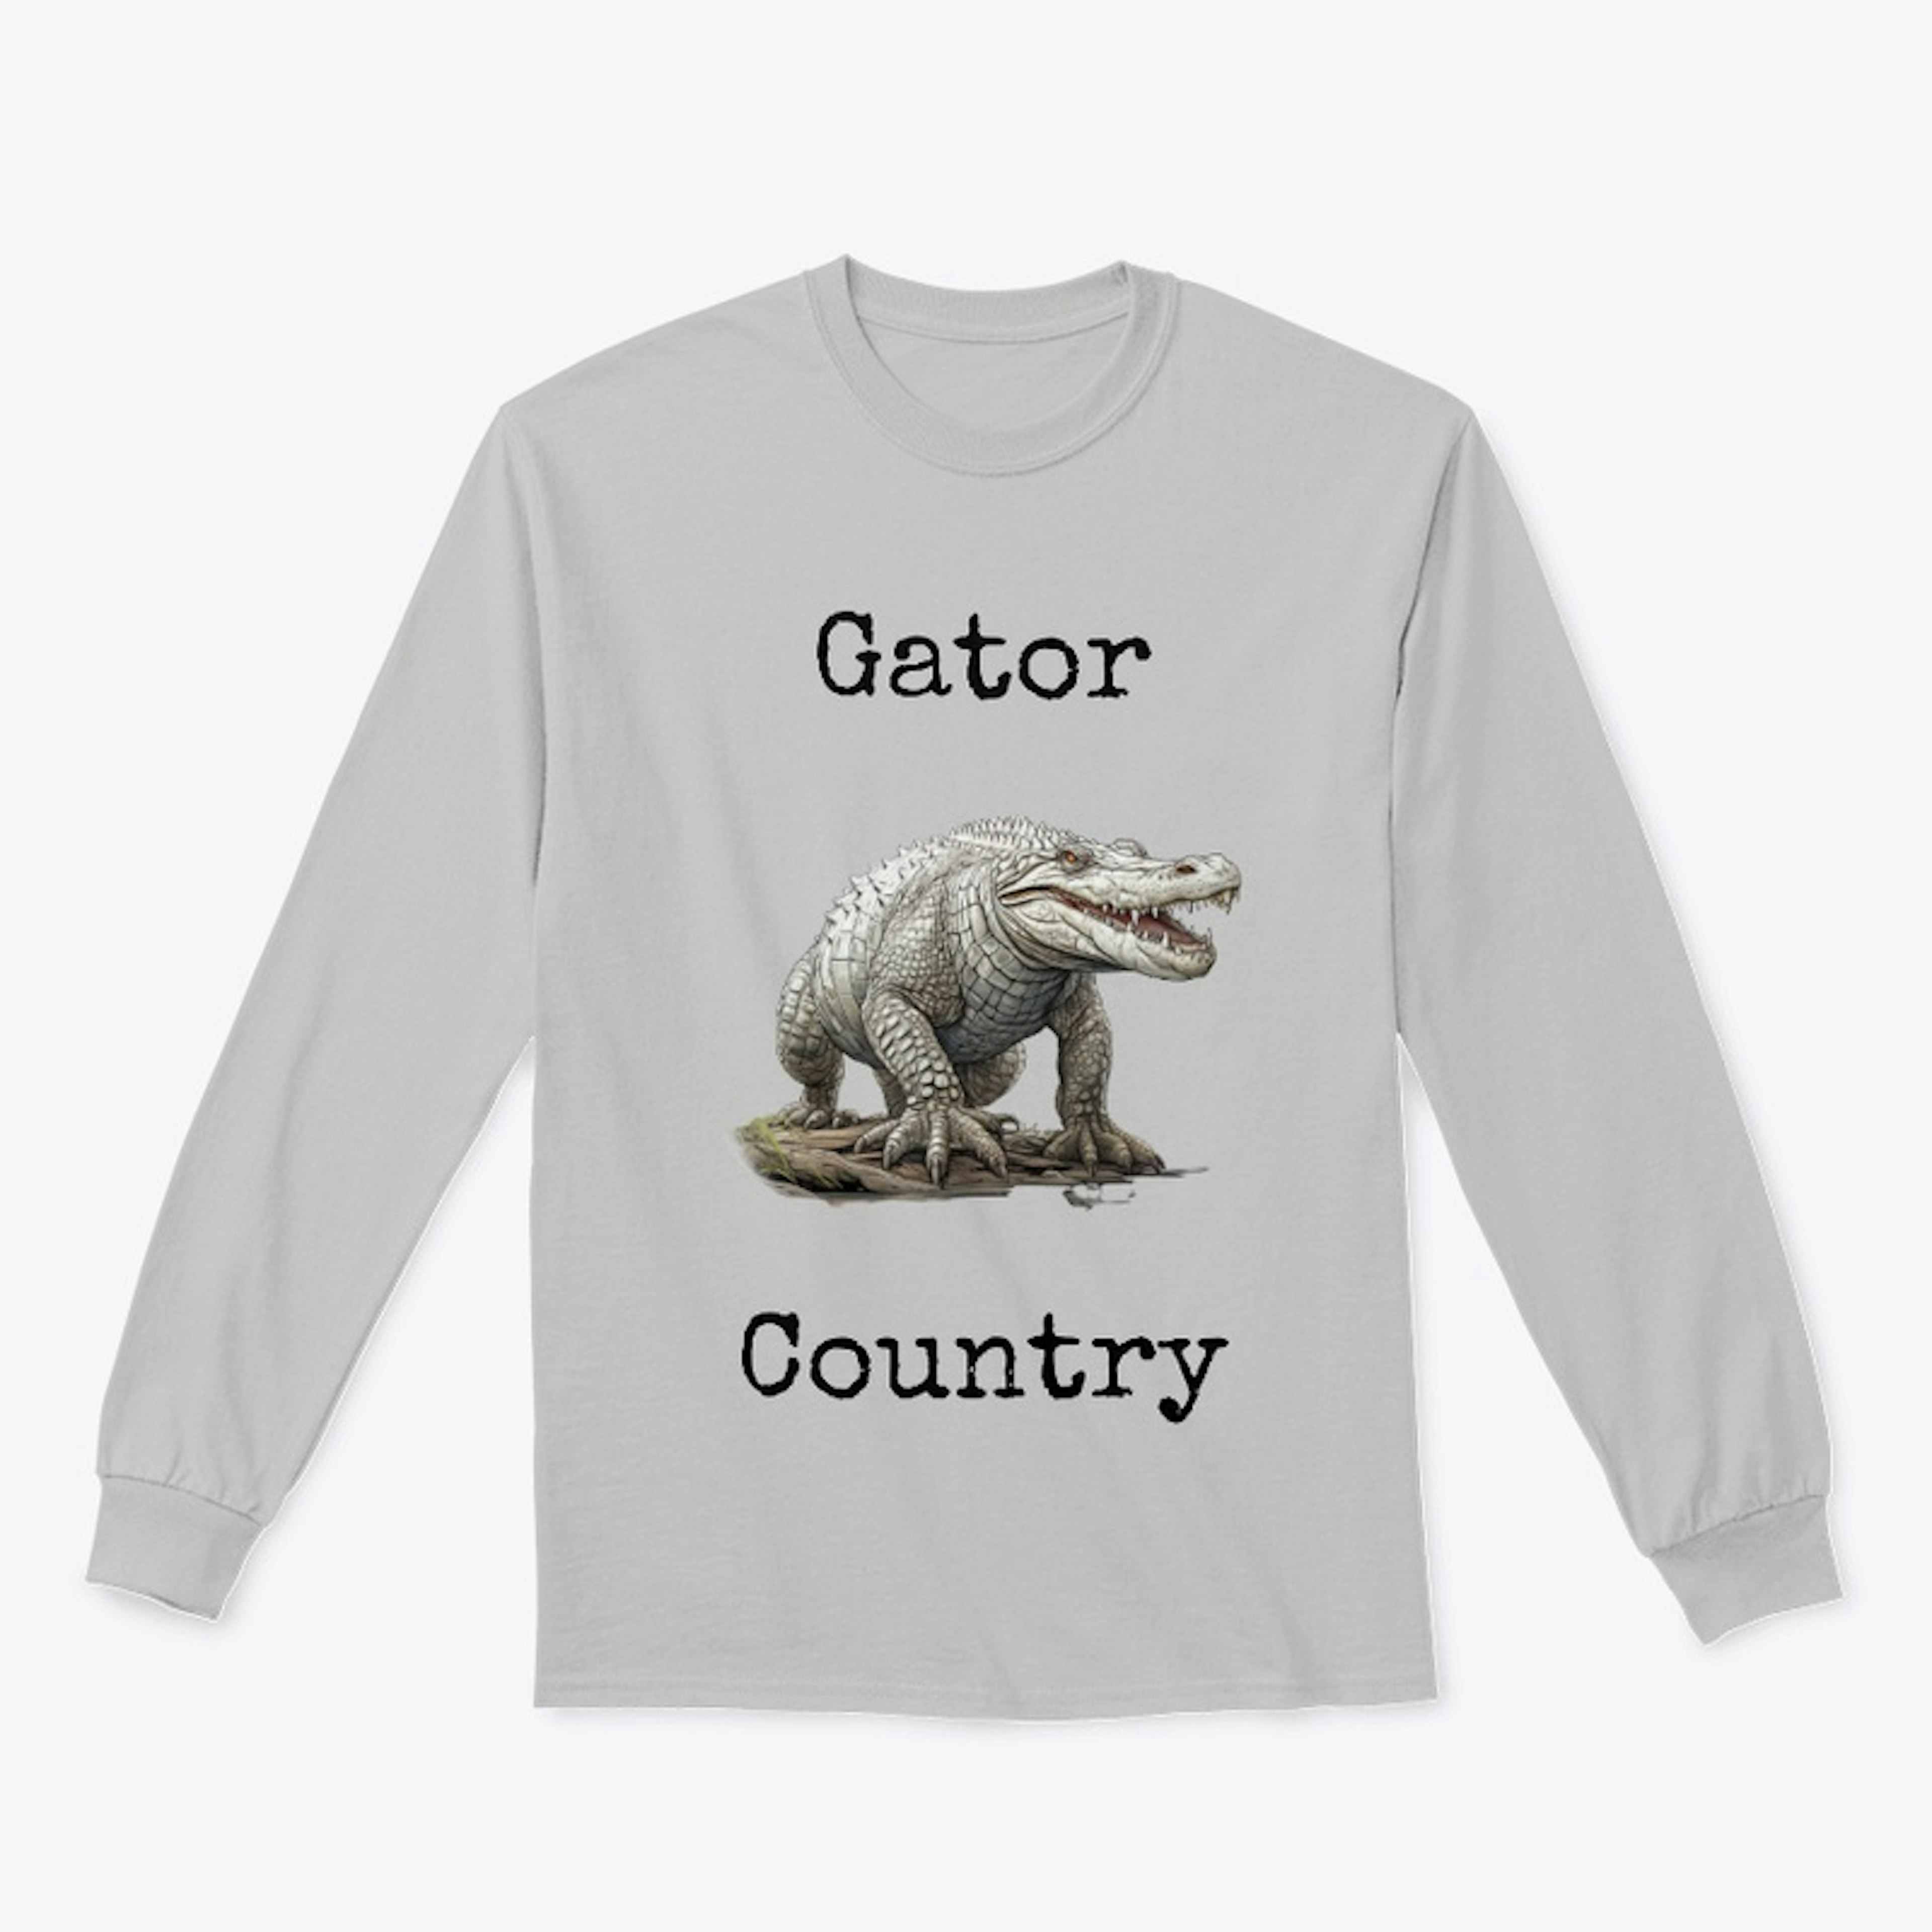 Gator country